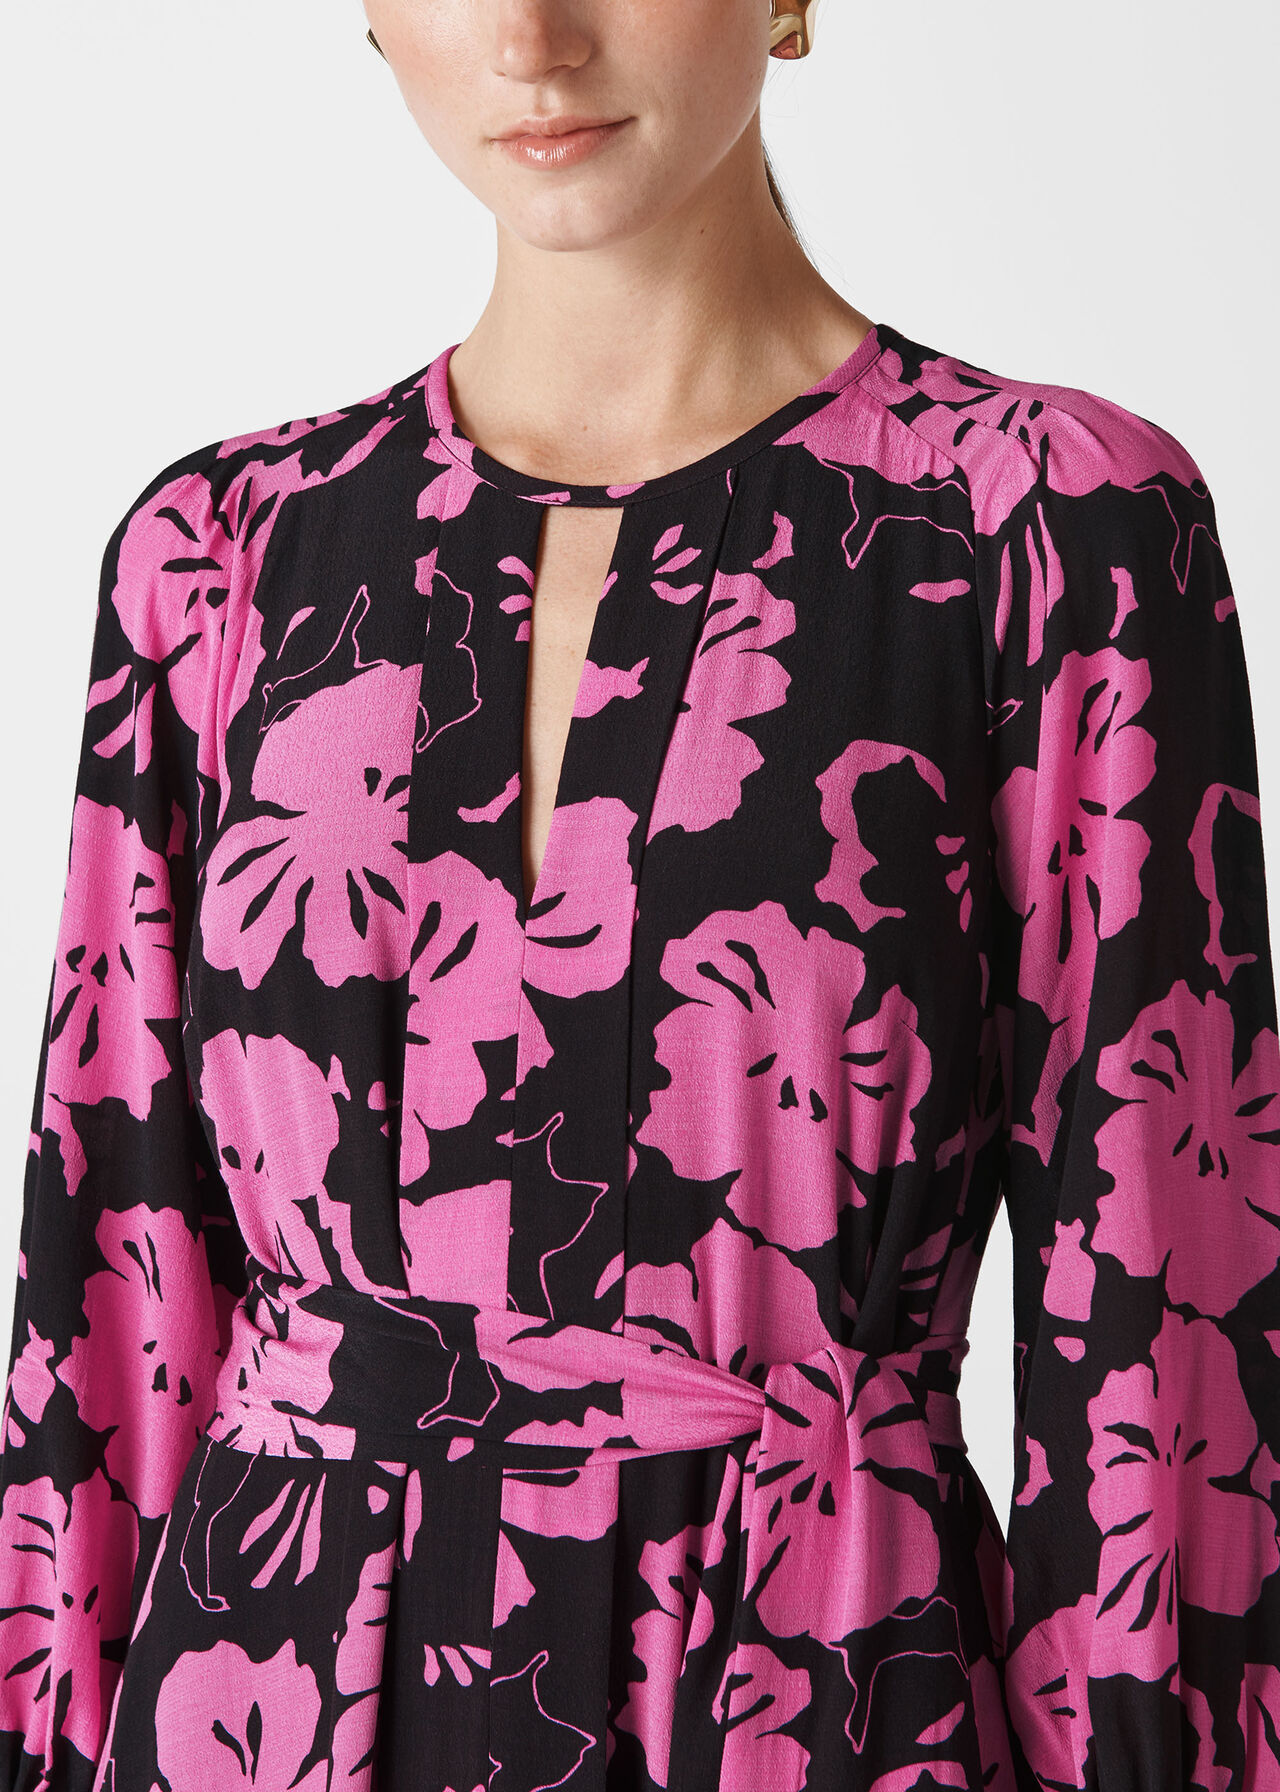 Ari Hibiscus Belted Dress Pink/Multi